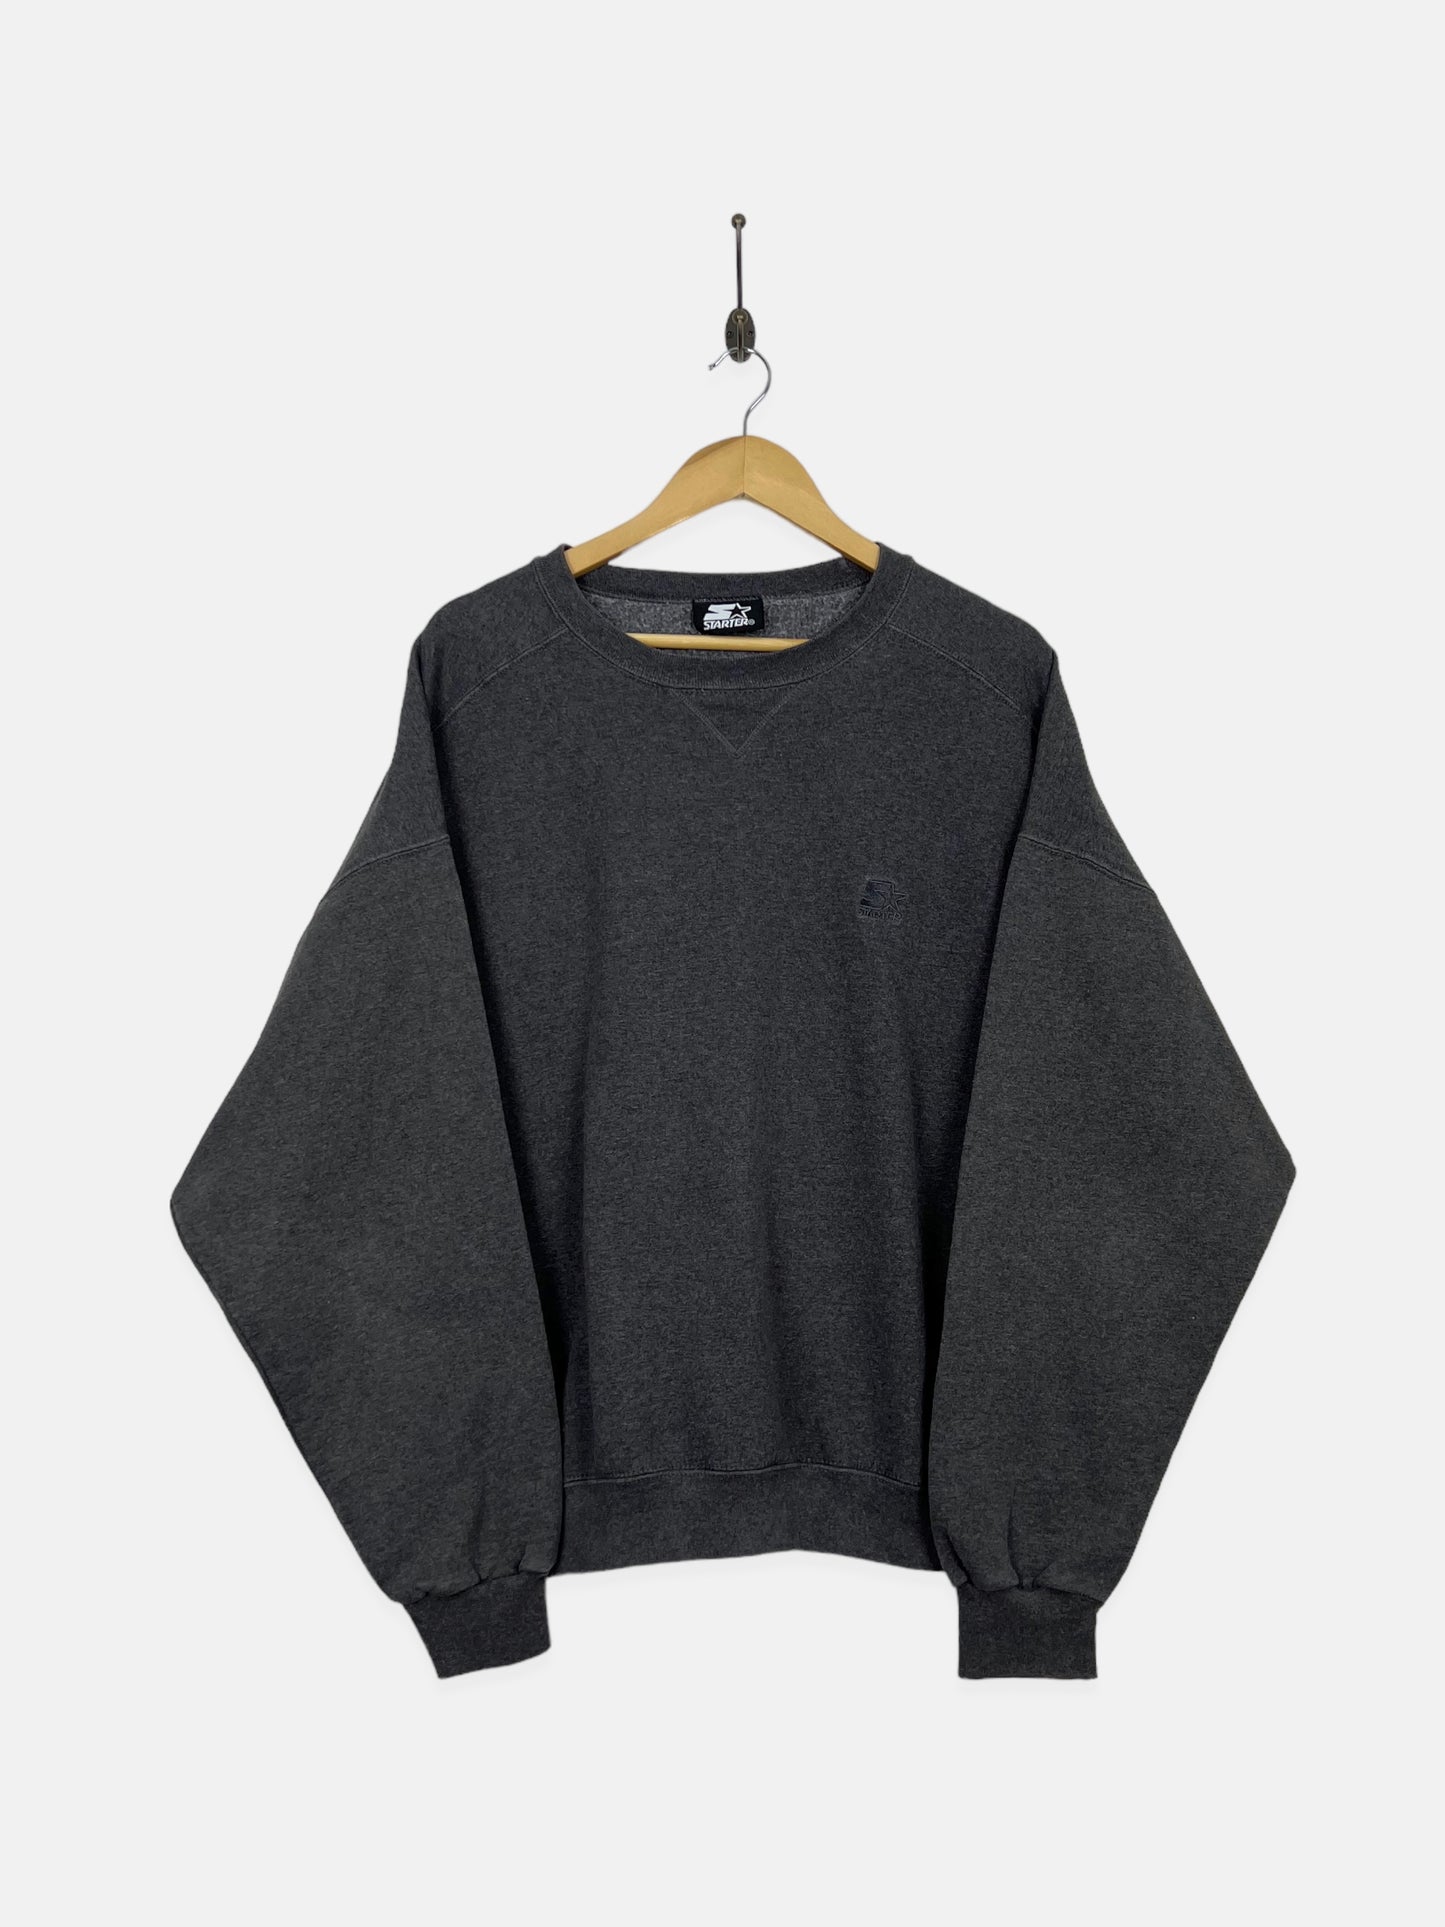 90's Starter Embroidered Vintage Sweatshirt Size L-XL